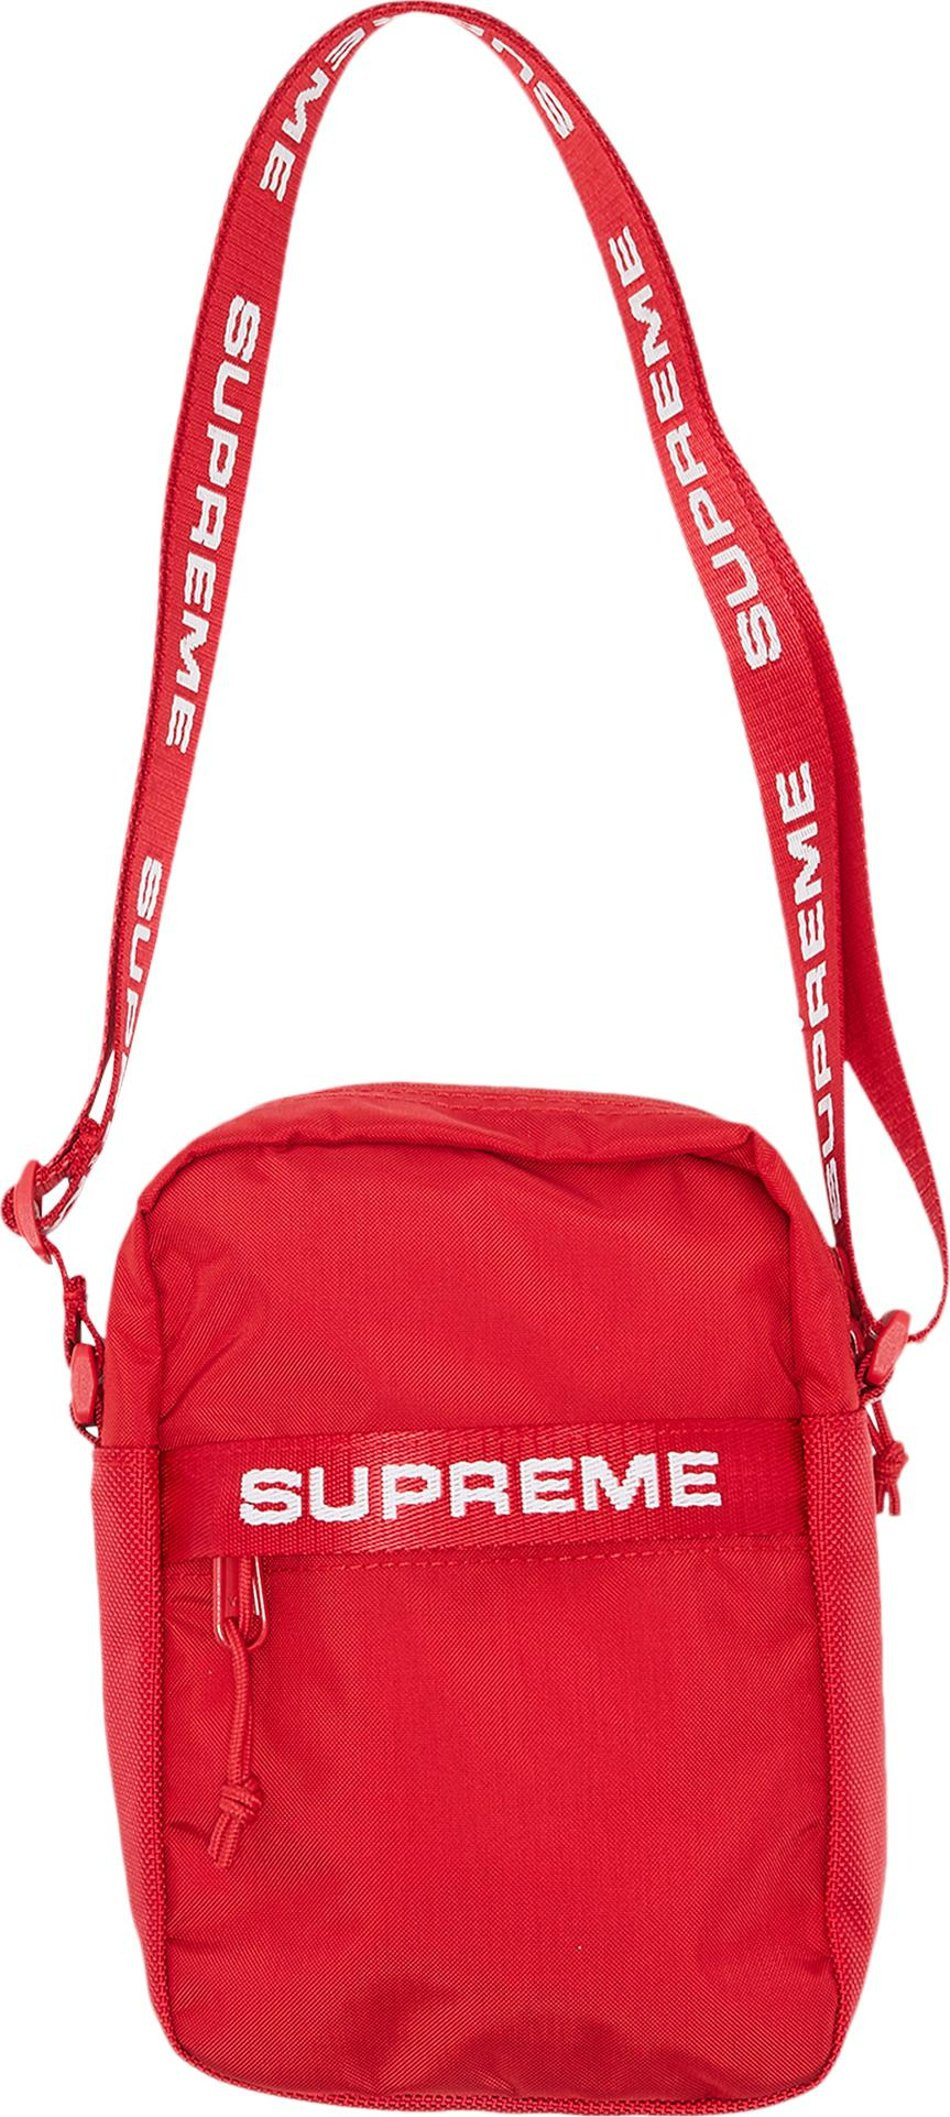 🔰fw18 supreme shoulder bag 🔰legit 💯 🔰condition 8.5/10 🔰RMsold ♻️